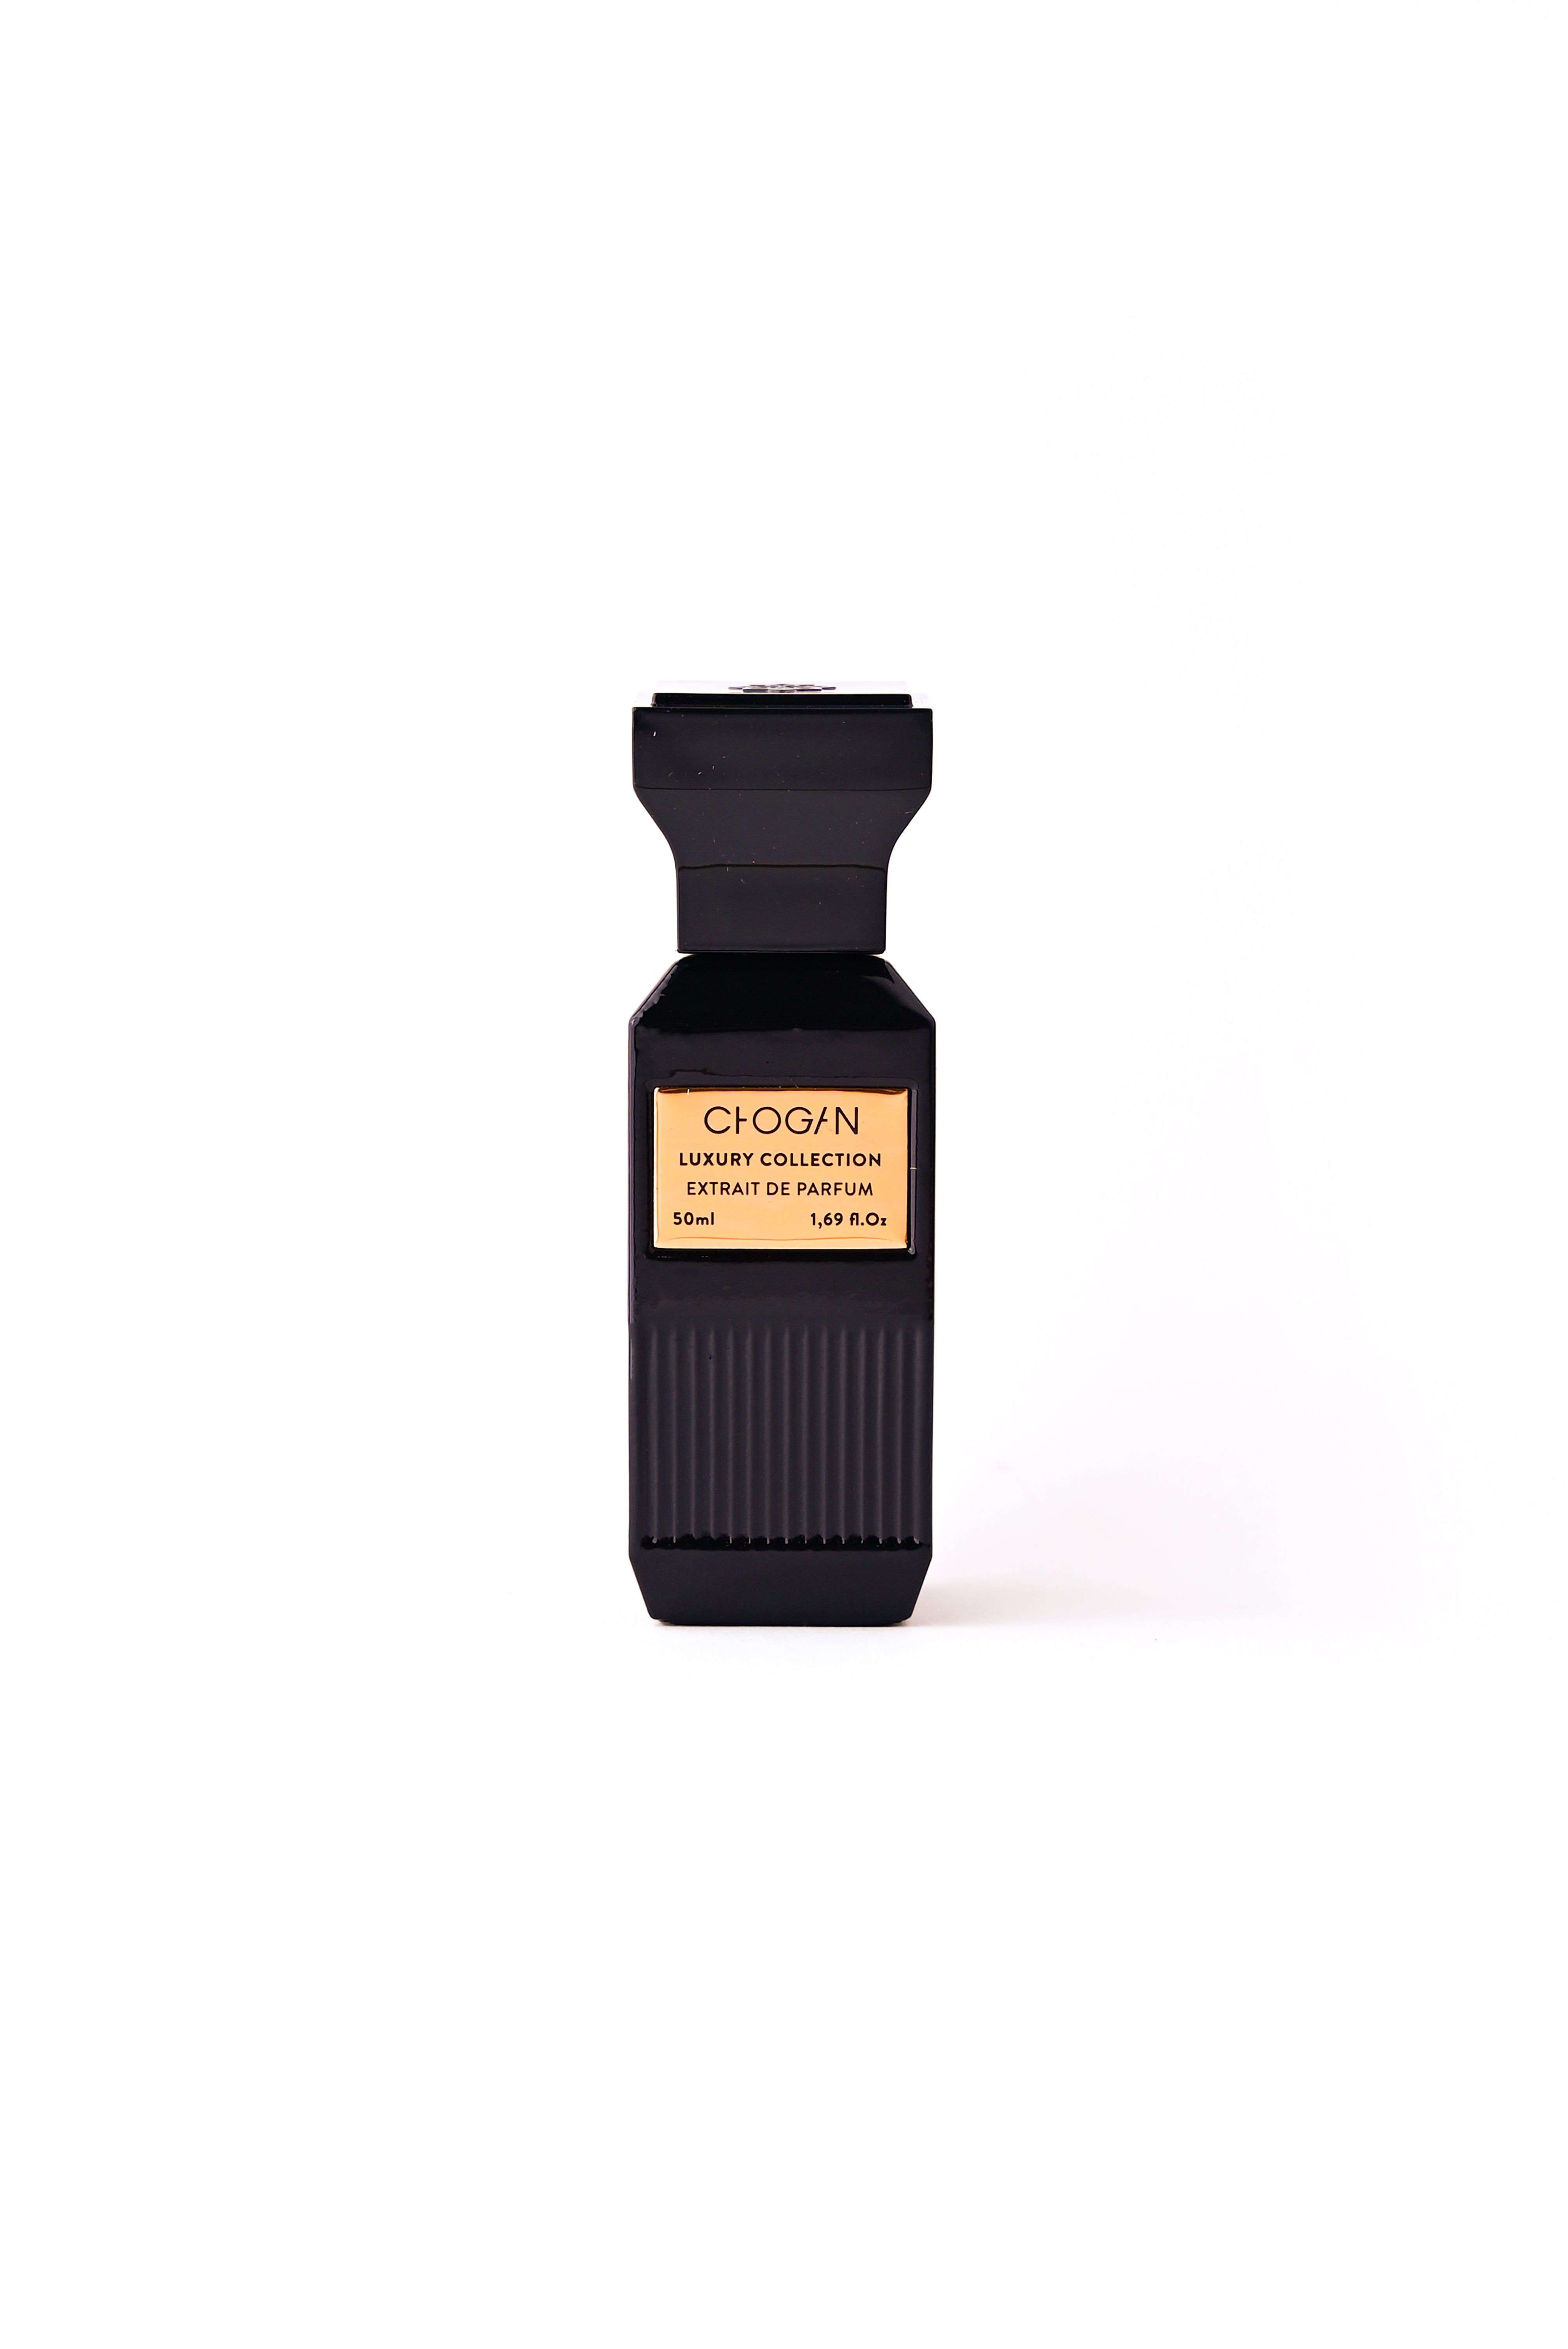 Chogan Men's Luxury Fragrance - 74 Smoky-Aromatic-Woody